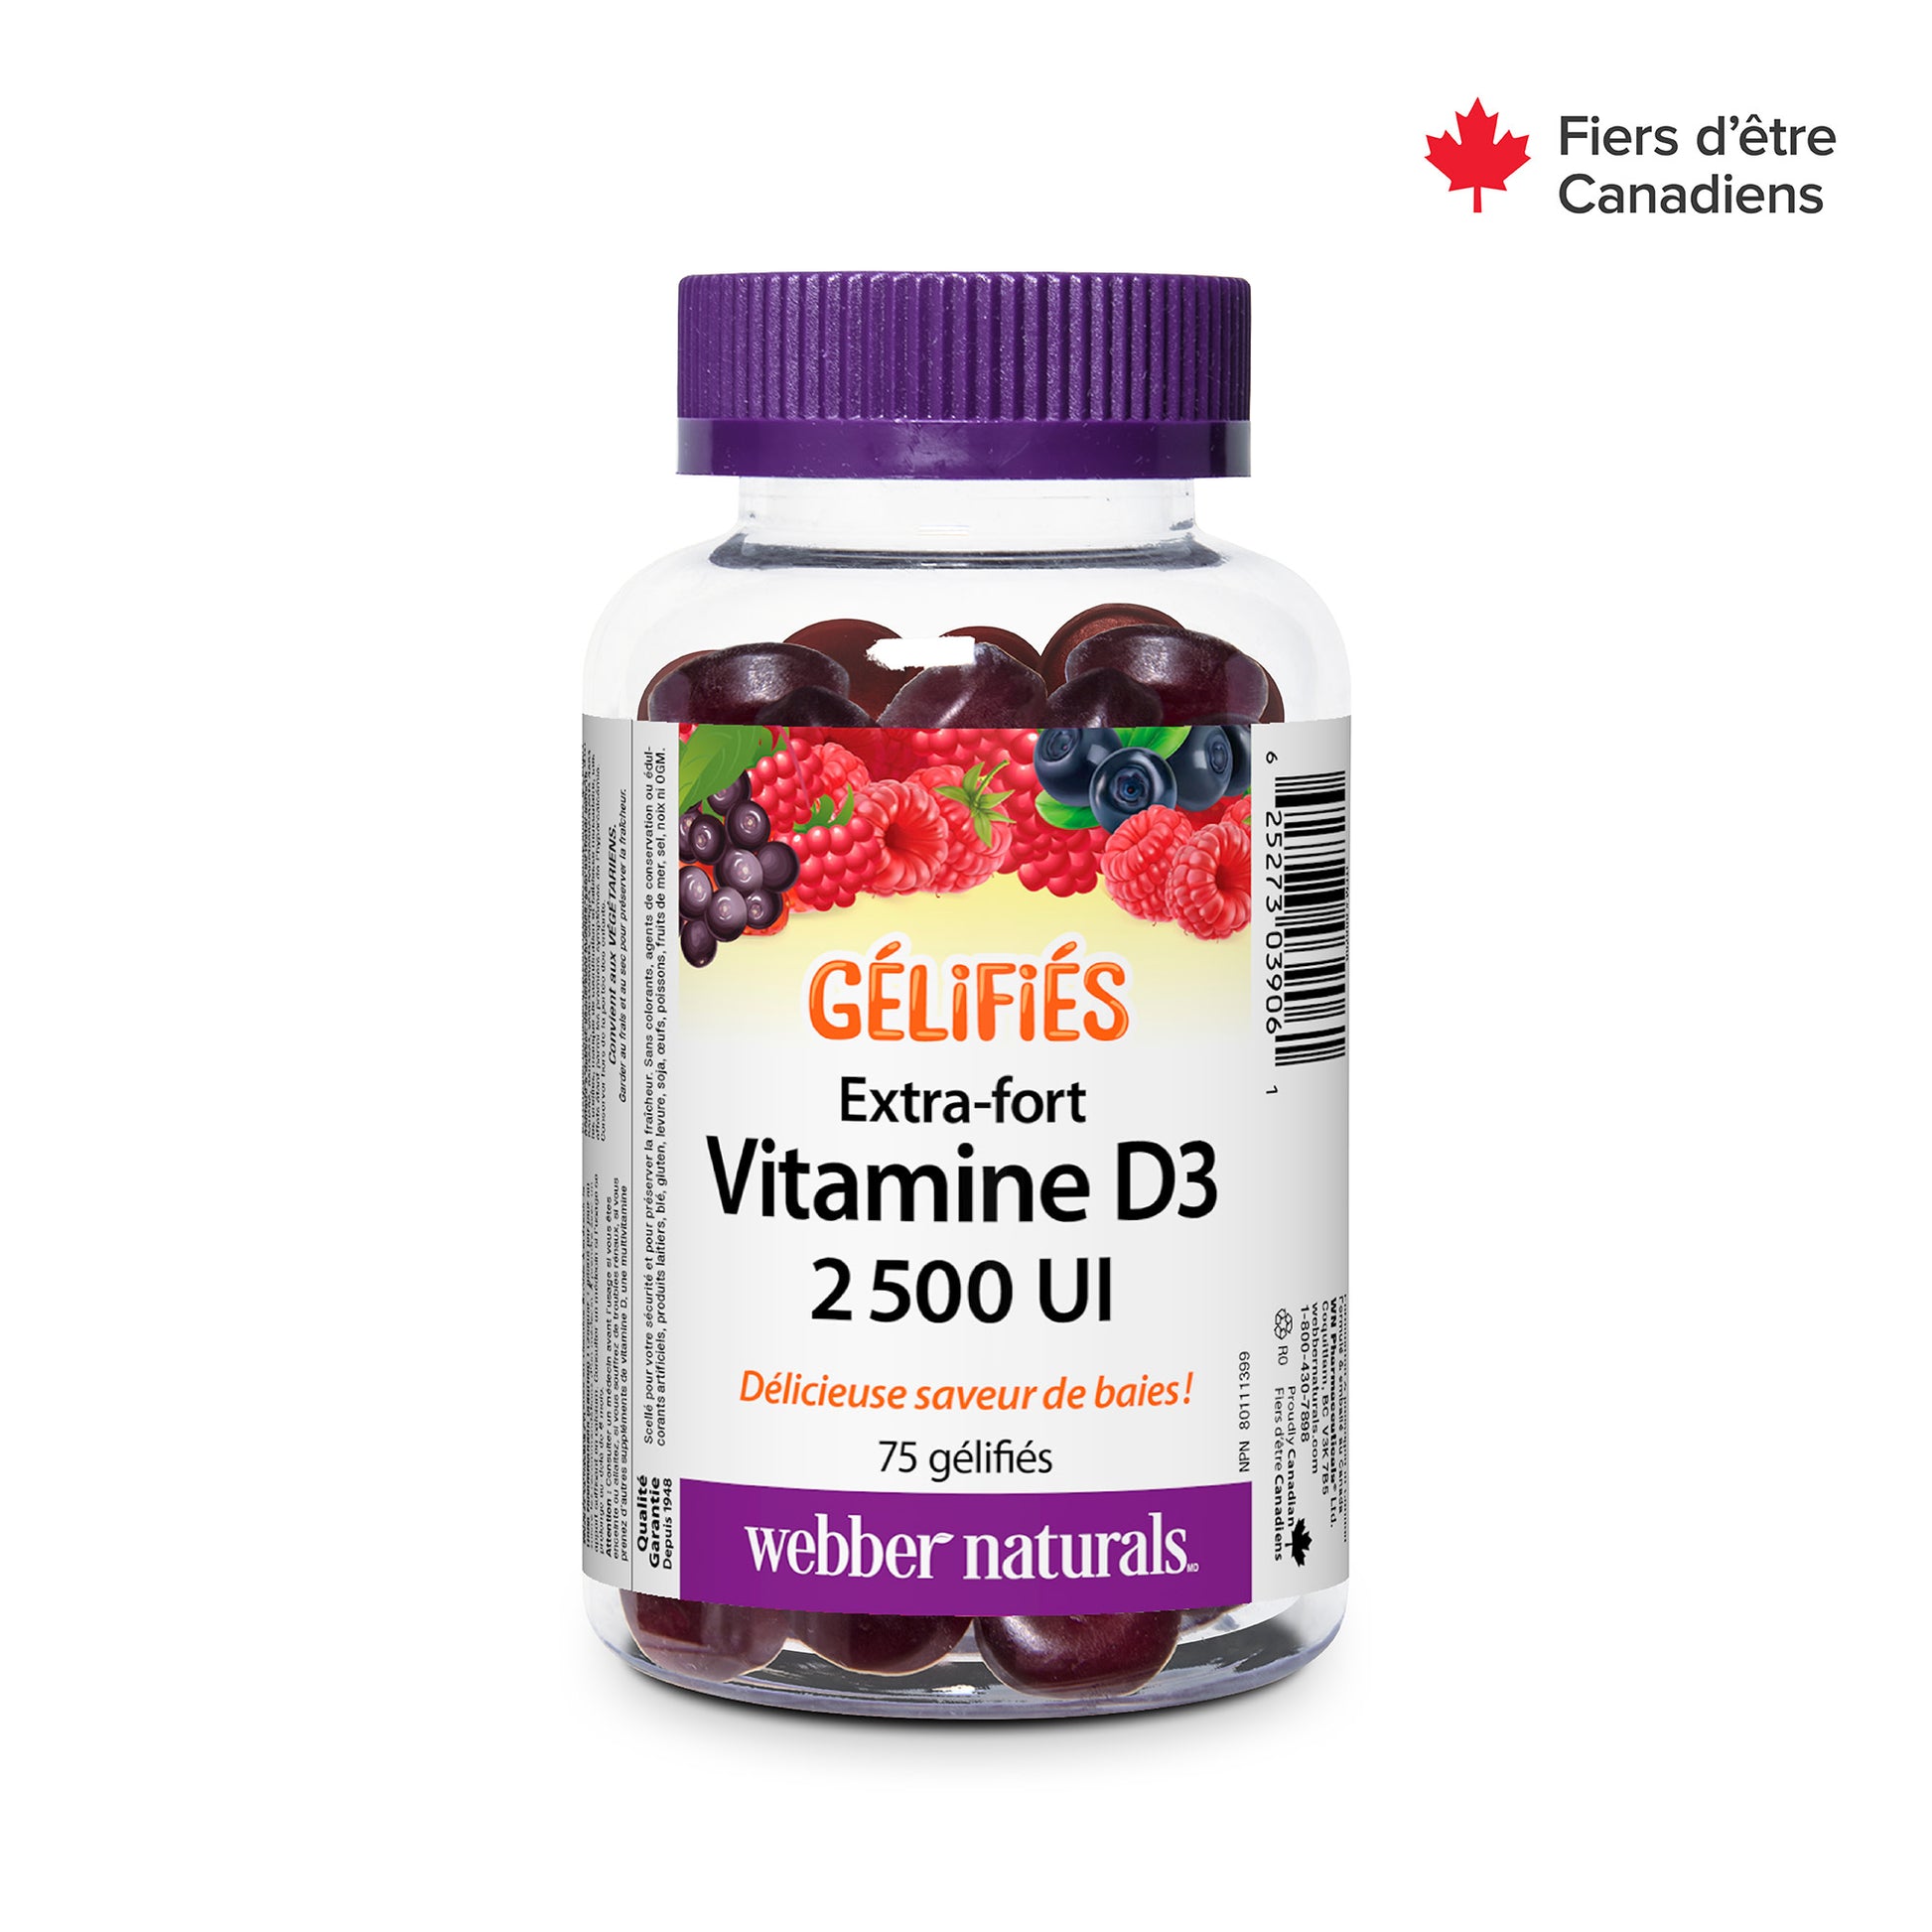 Vitamin D3 Extra Strength 2500 IU   for Webber Naturals|v|hi-res|WN3906